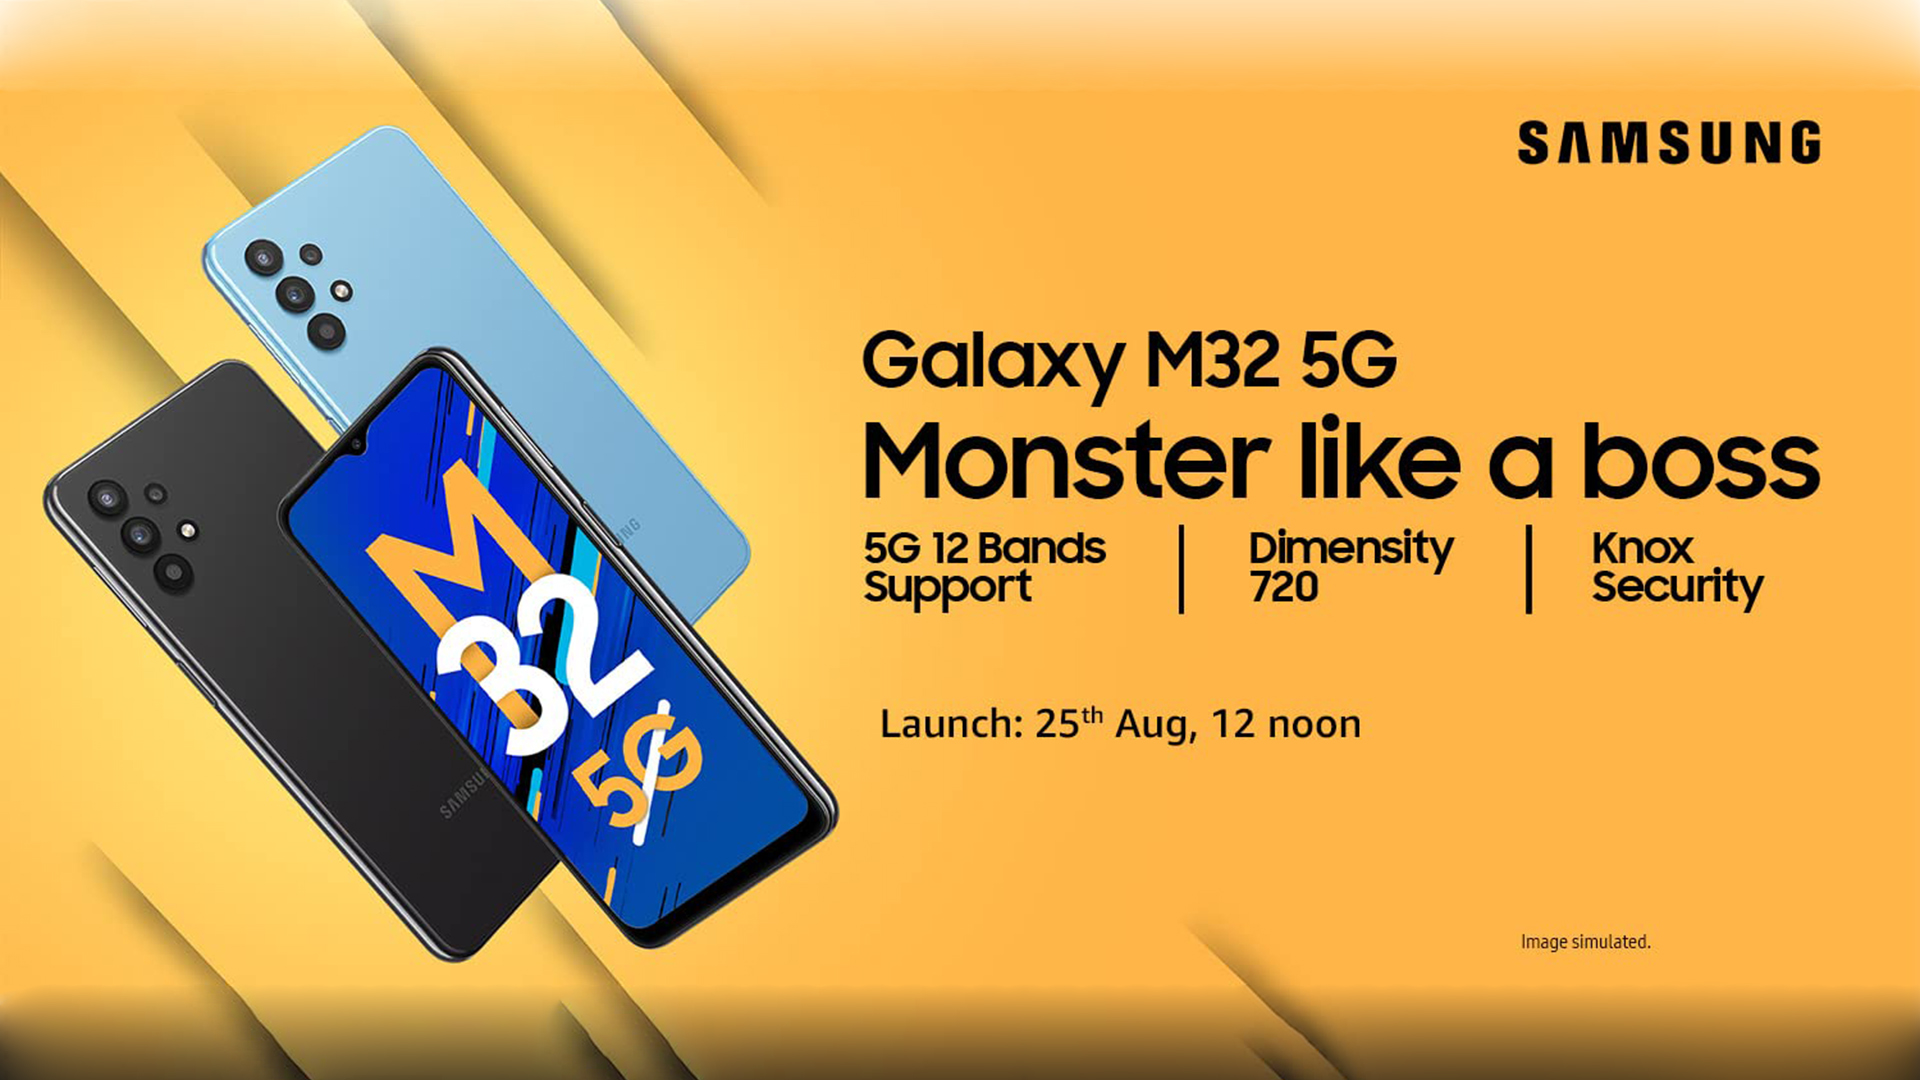 Samsung Galaxy M32 5G Amazon teaser